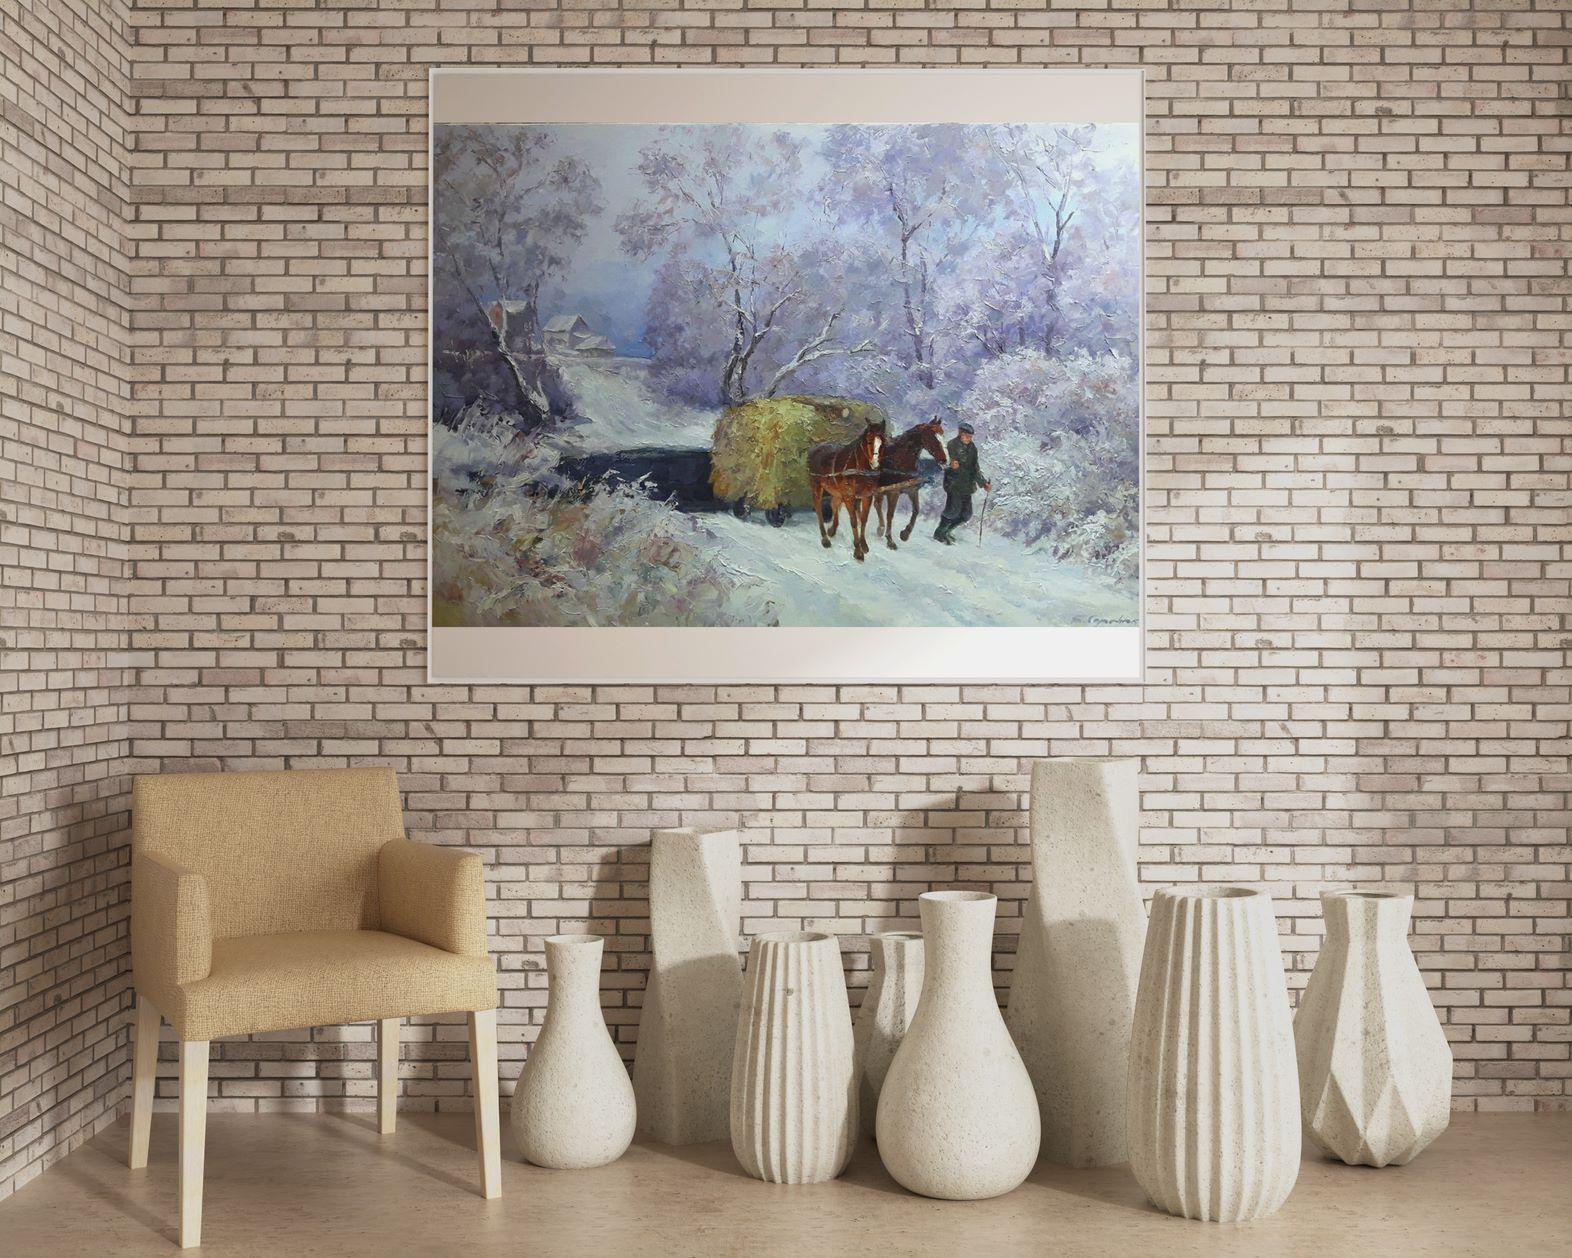 Artist: Boris Serdyuk 
Work: Original oil painting, handmade artwork, one of a kind 
Medium: Oil on Cardboard
Style: Impressionism
Year: 2020
Title: Winter has come
Size: 27.5